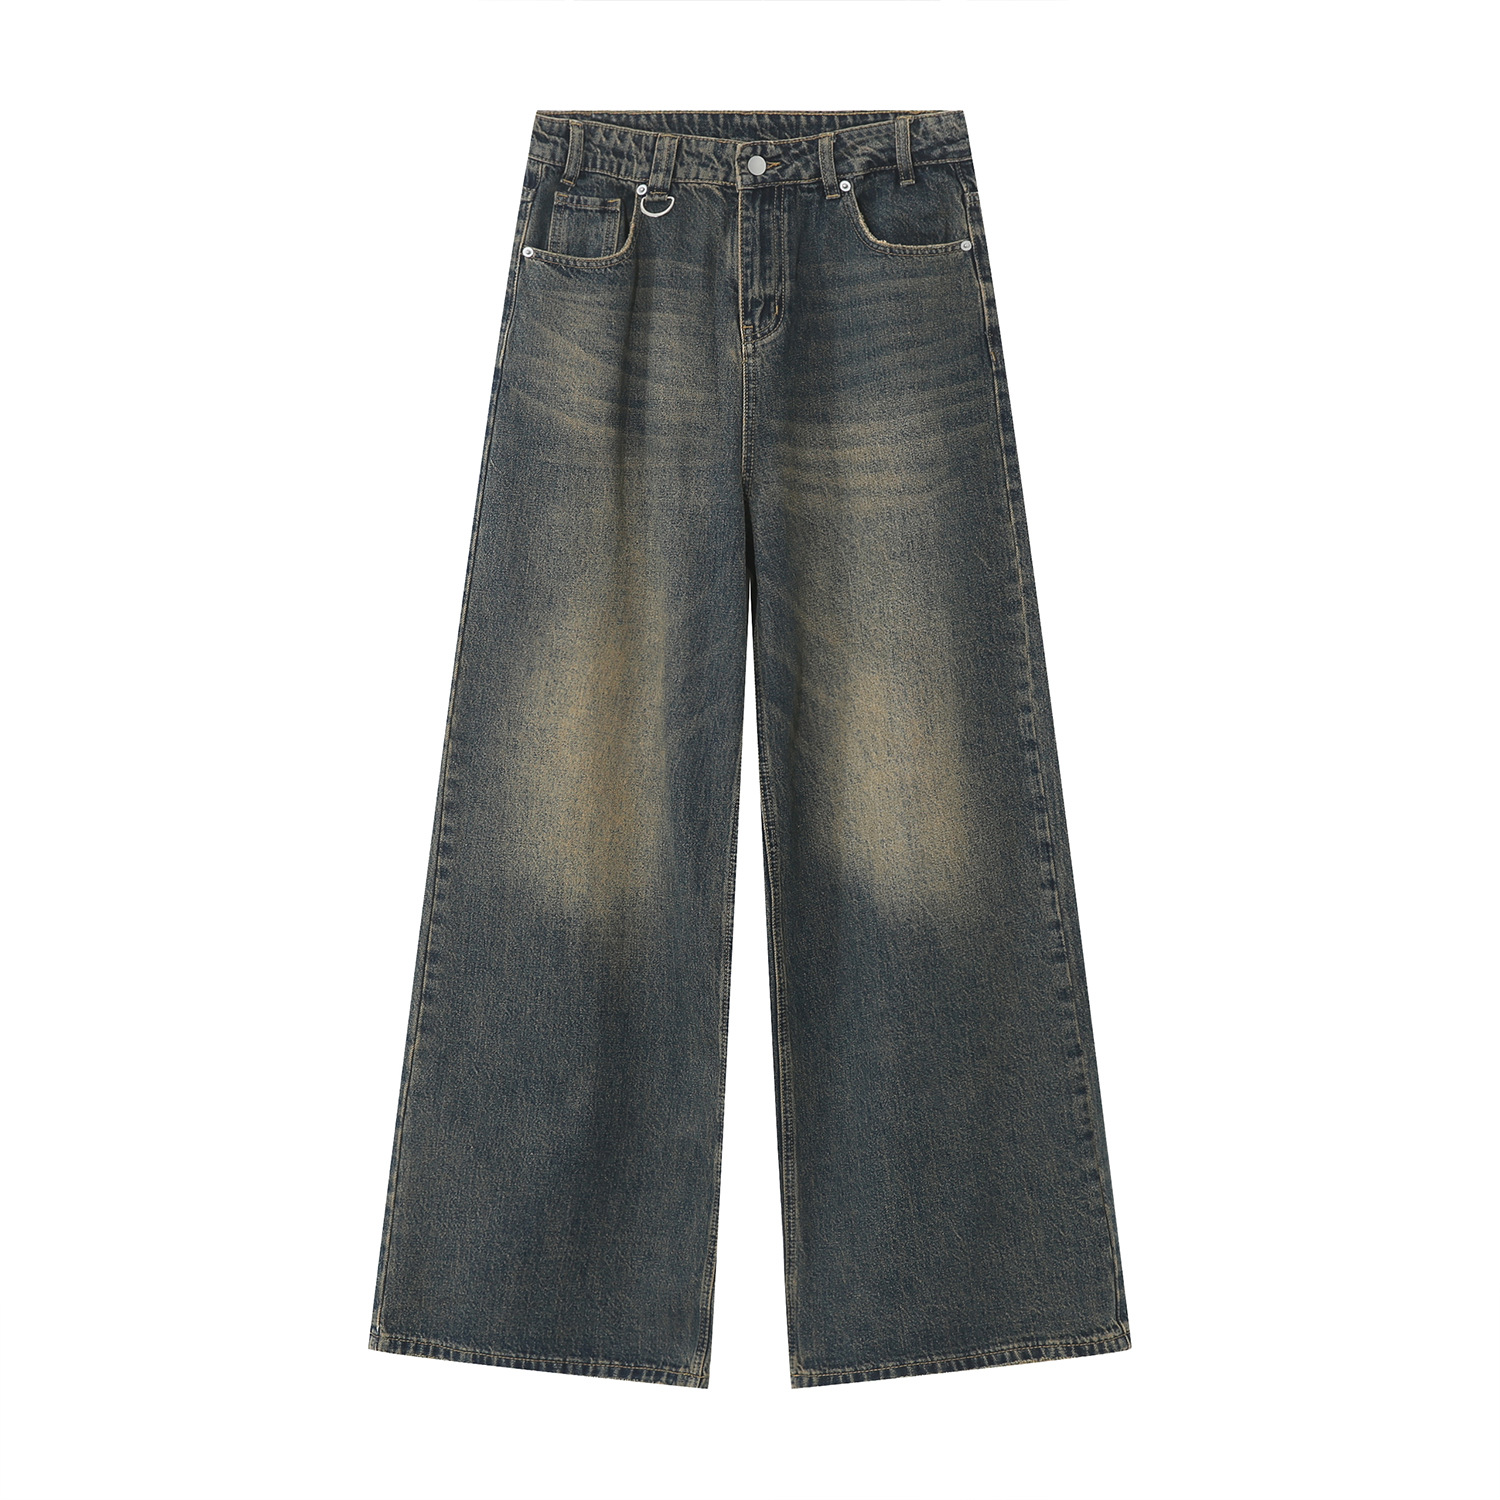 Retro Distressed Floor-Length Jeans